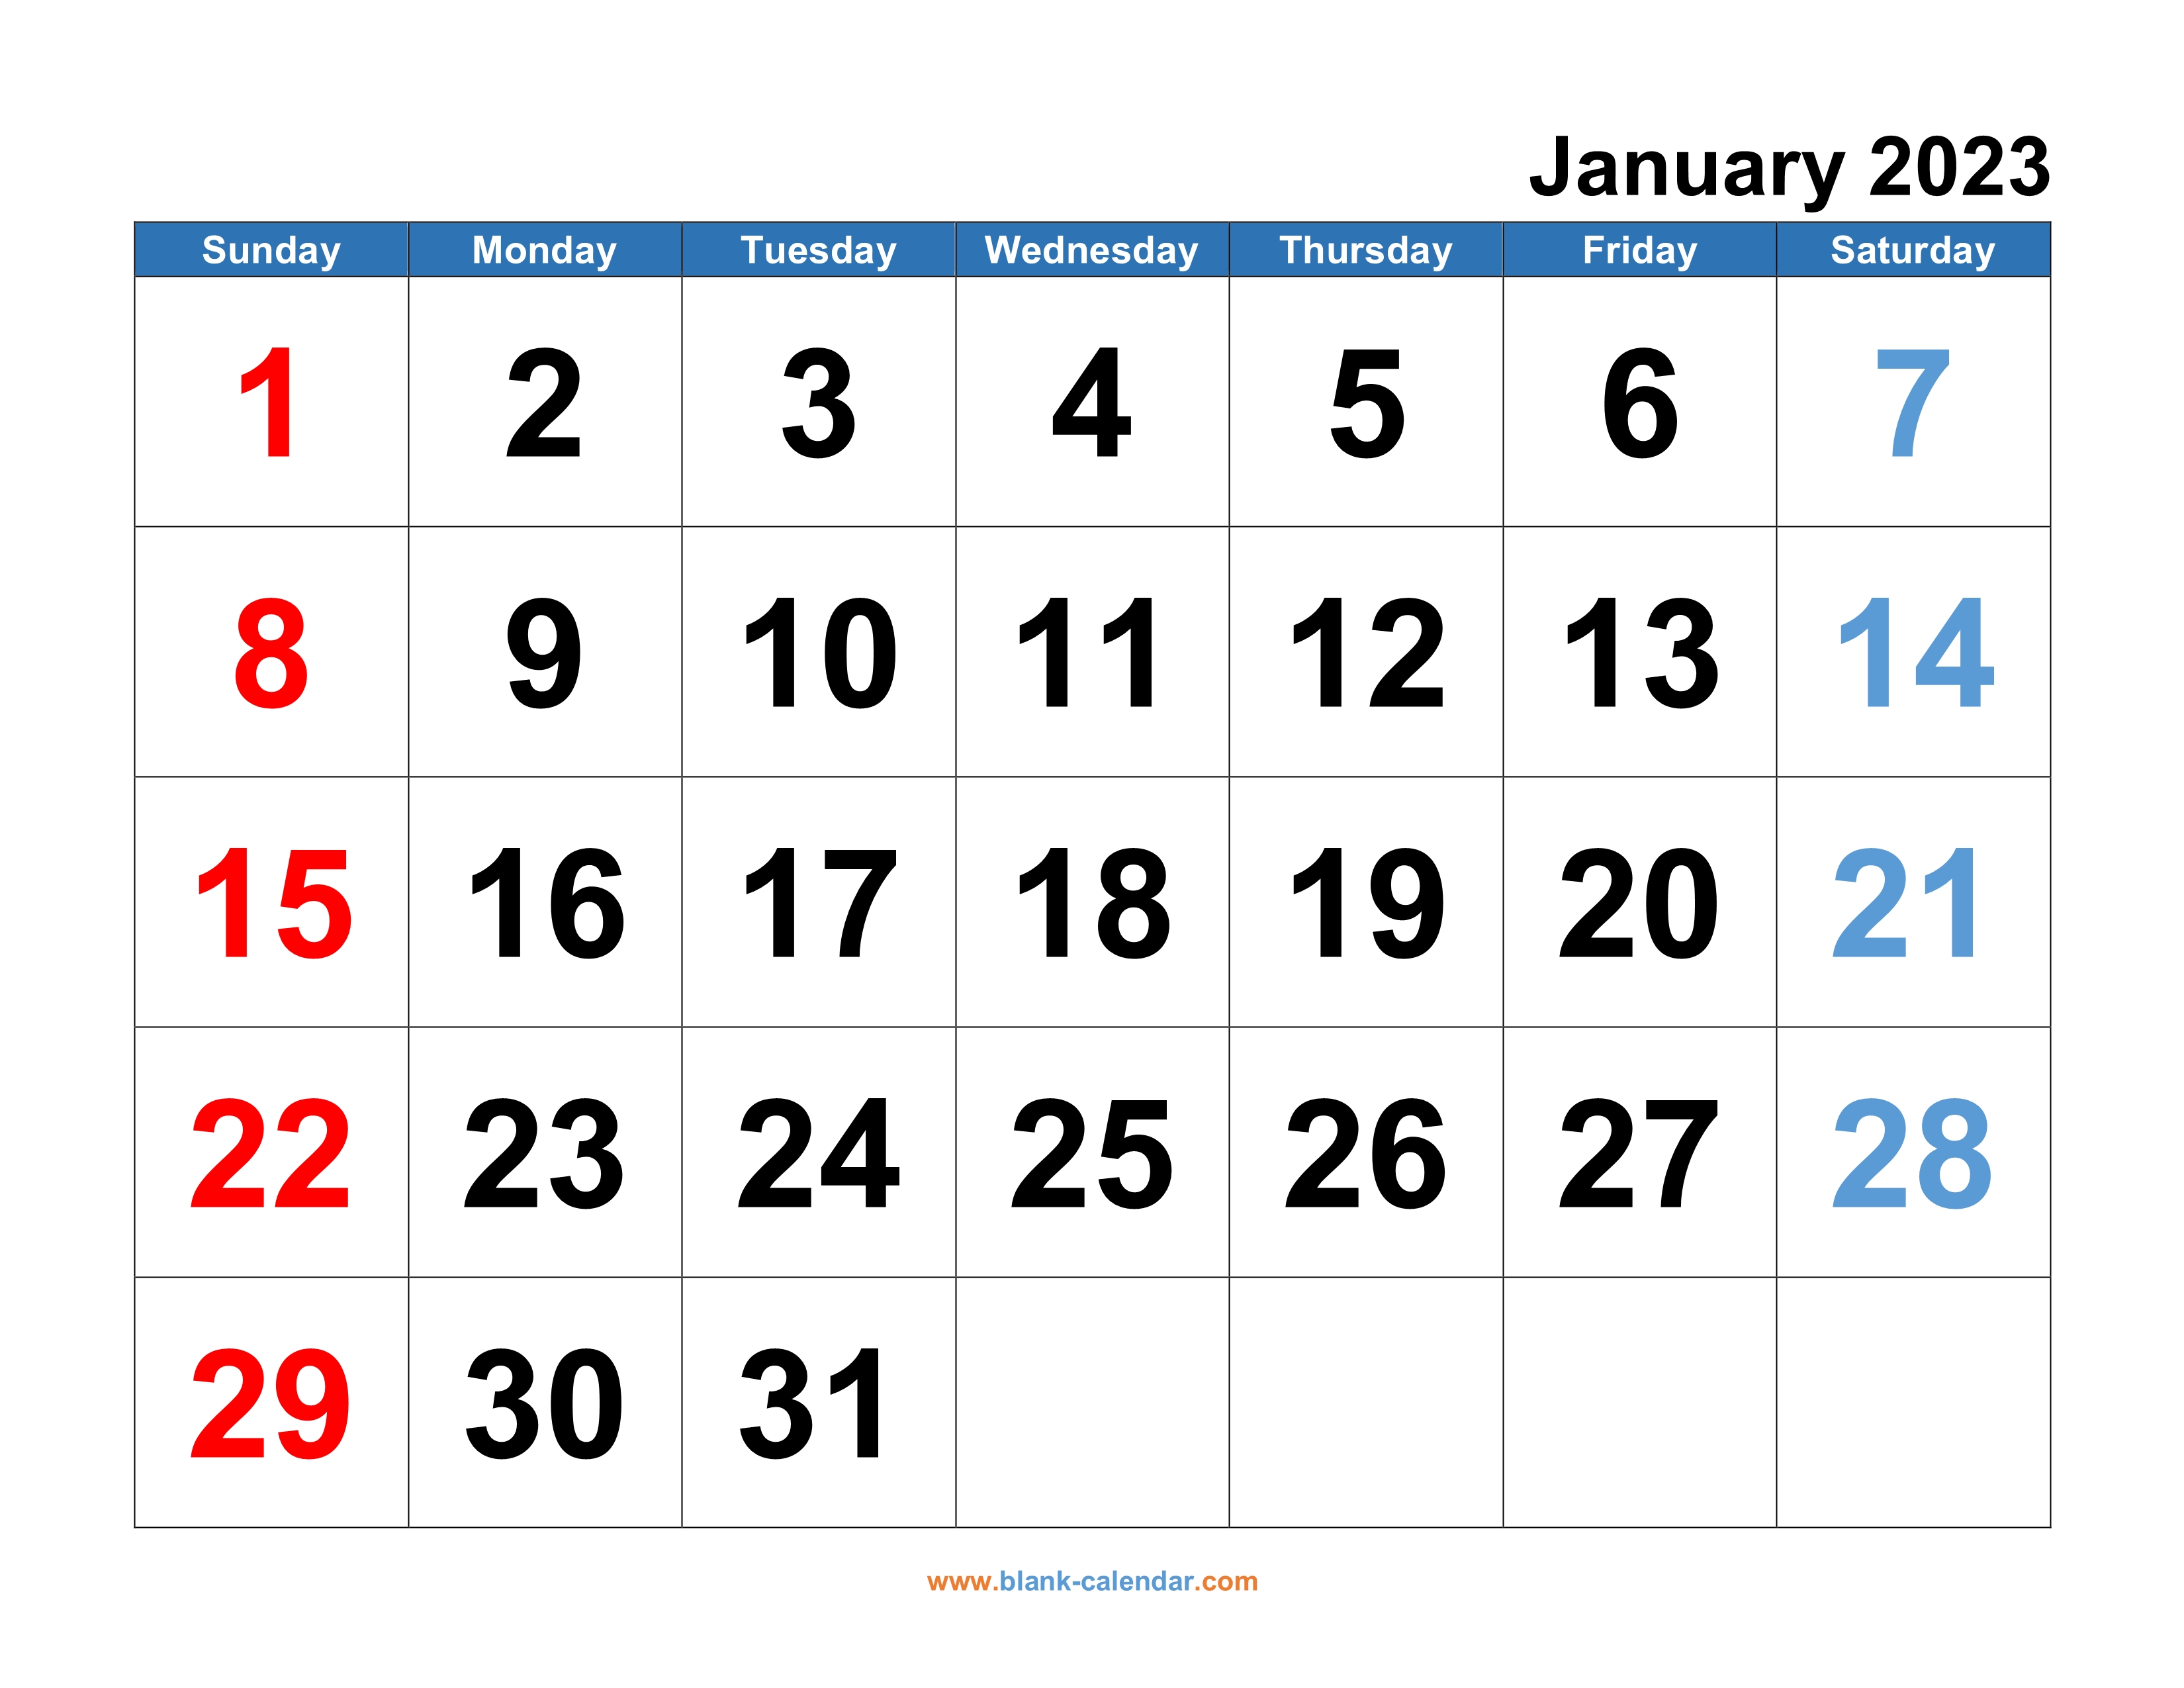 free-printable-2023-monthly-calendar-www-aubergecourtepointe